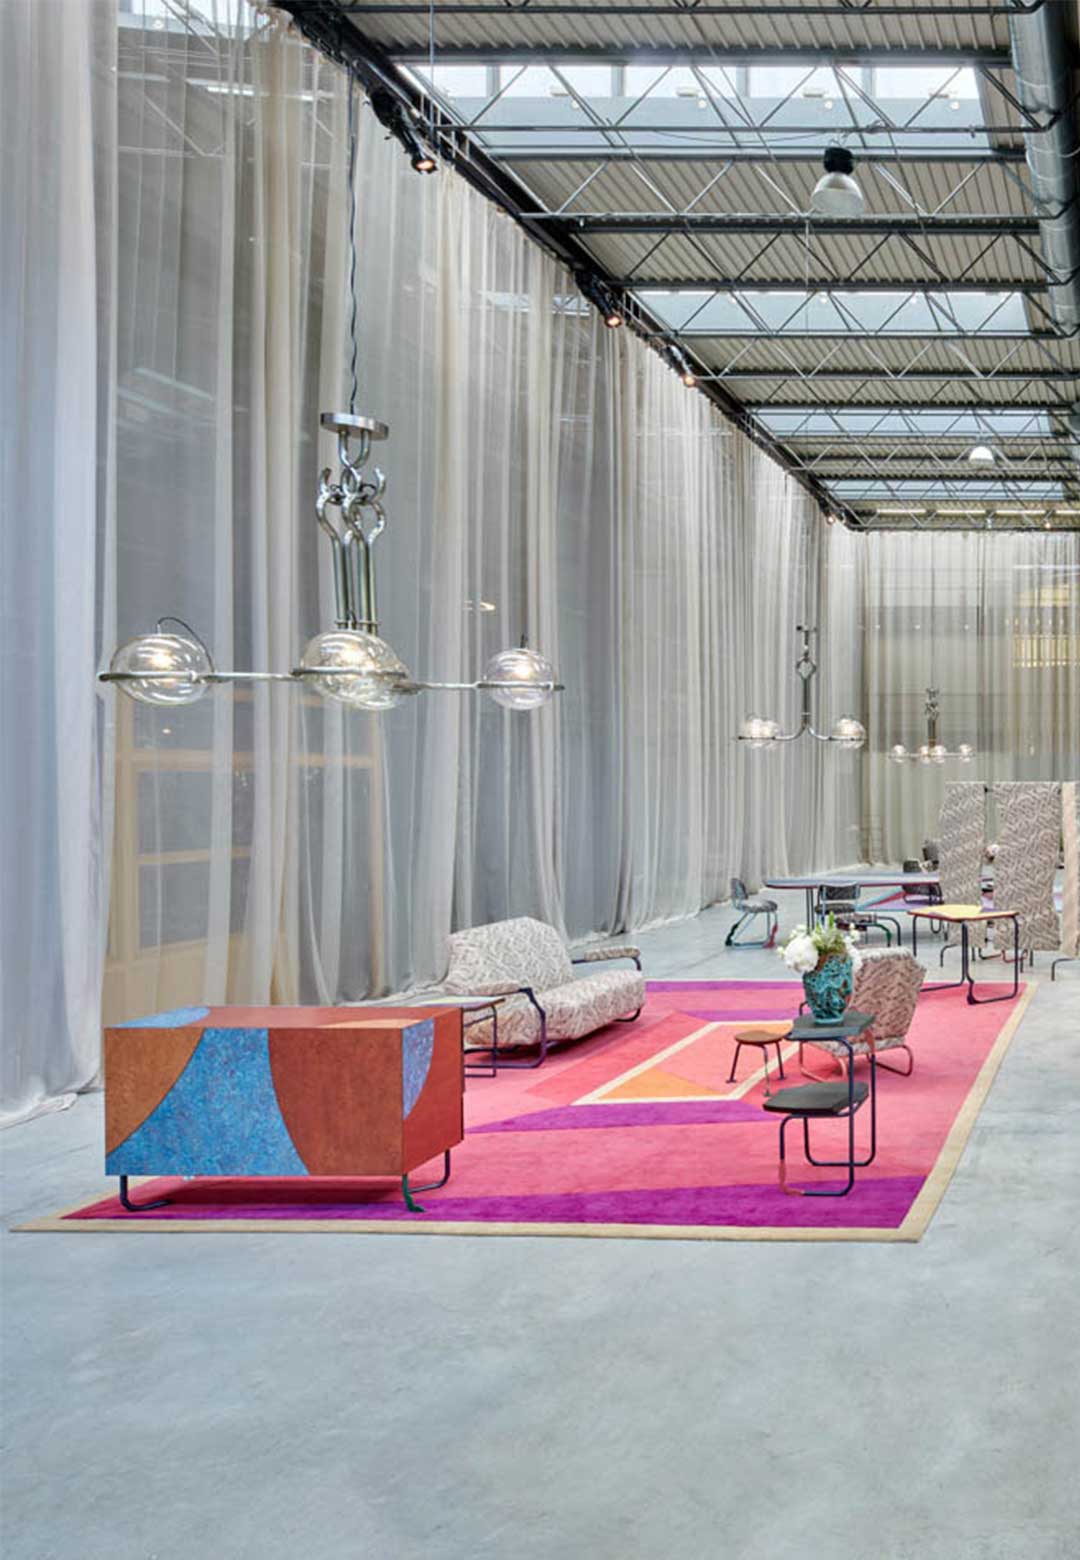 Nilufar Gallery bridges generations and styles at Milan Design Week 2022